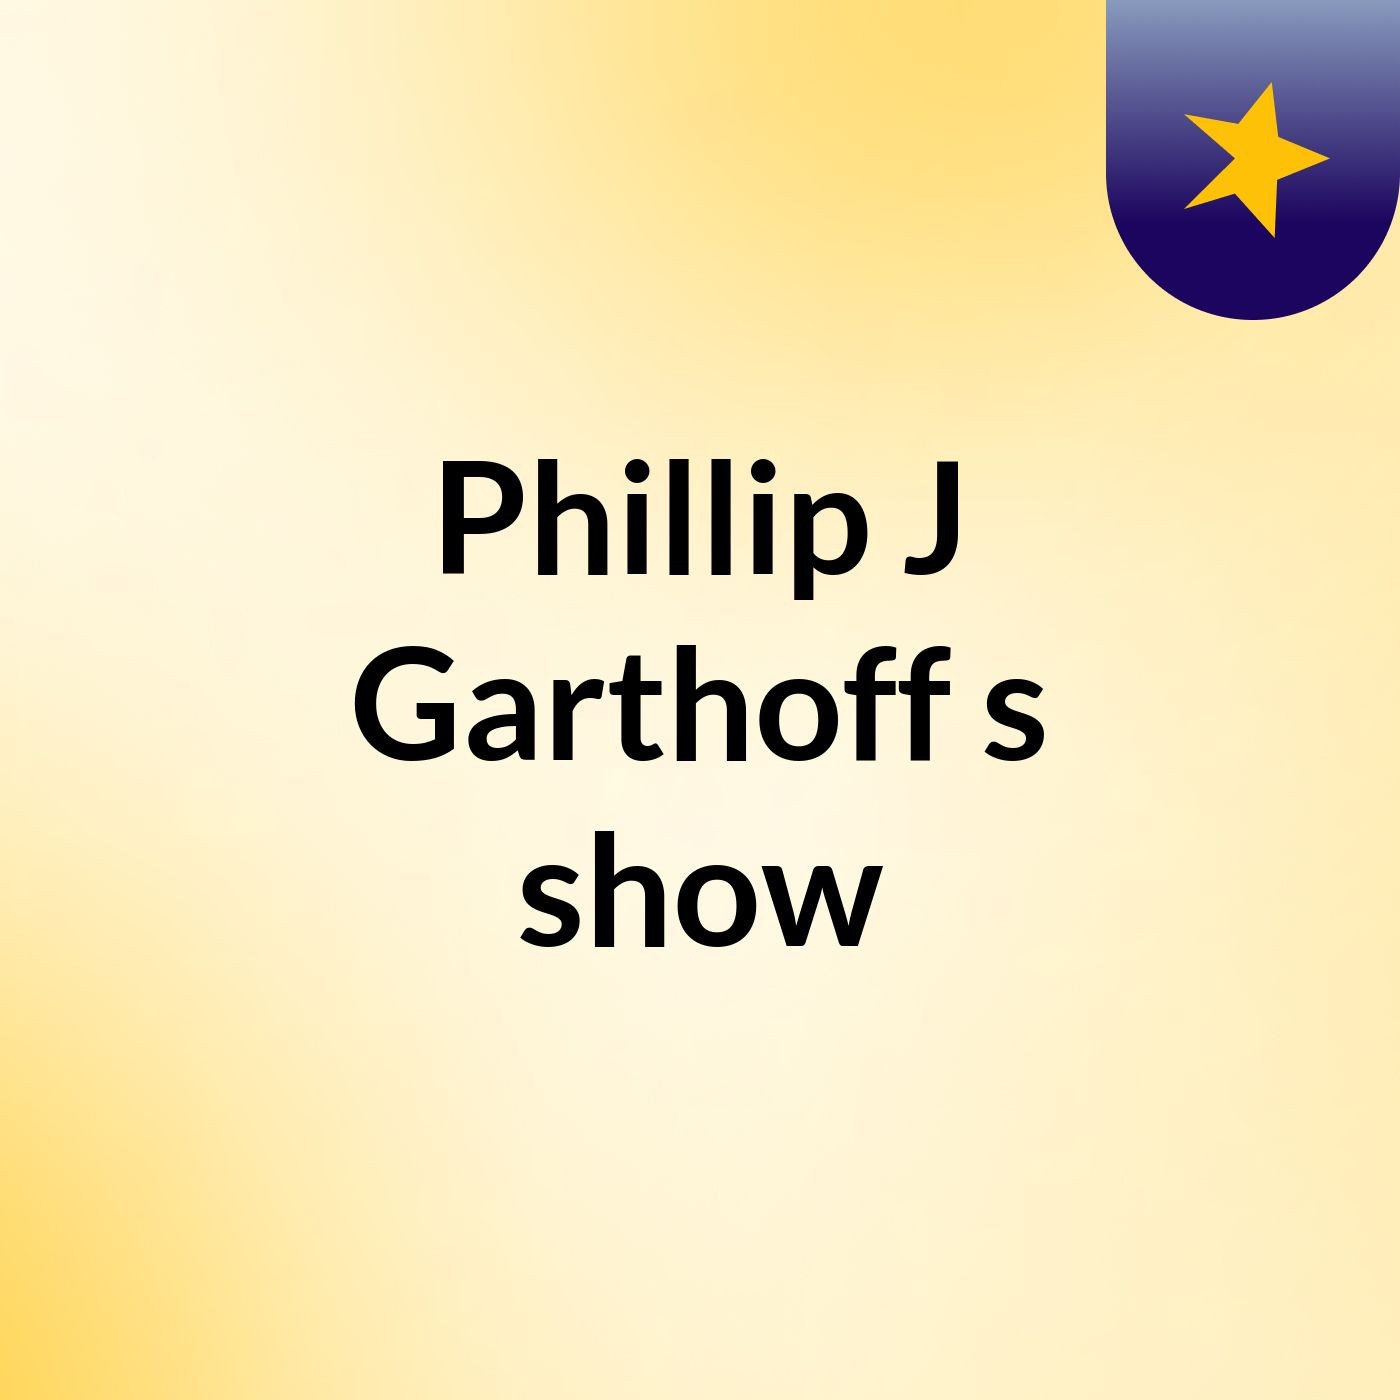 Phillip J Garthoff's show